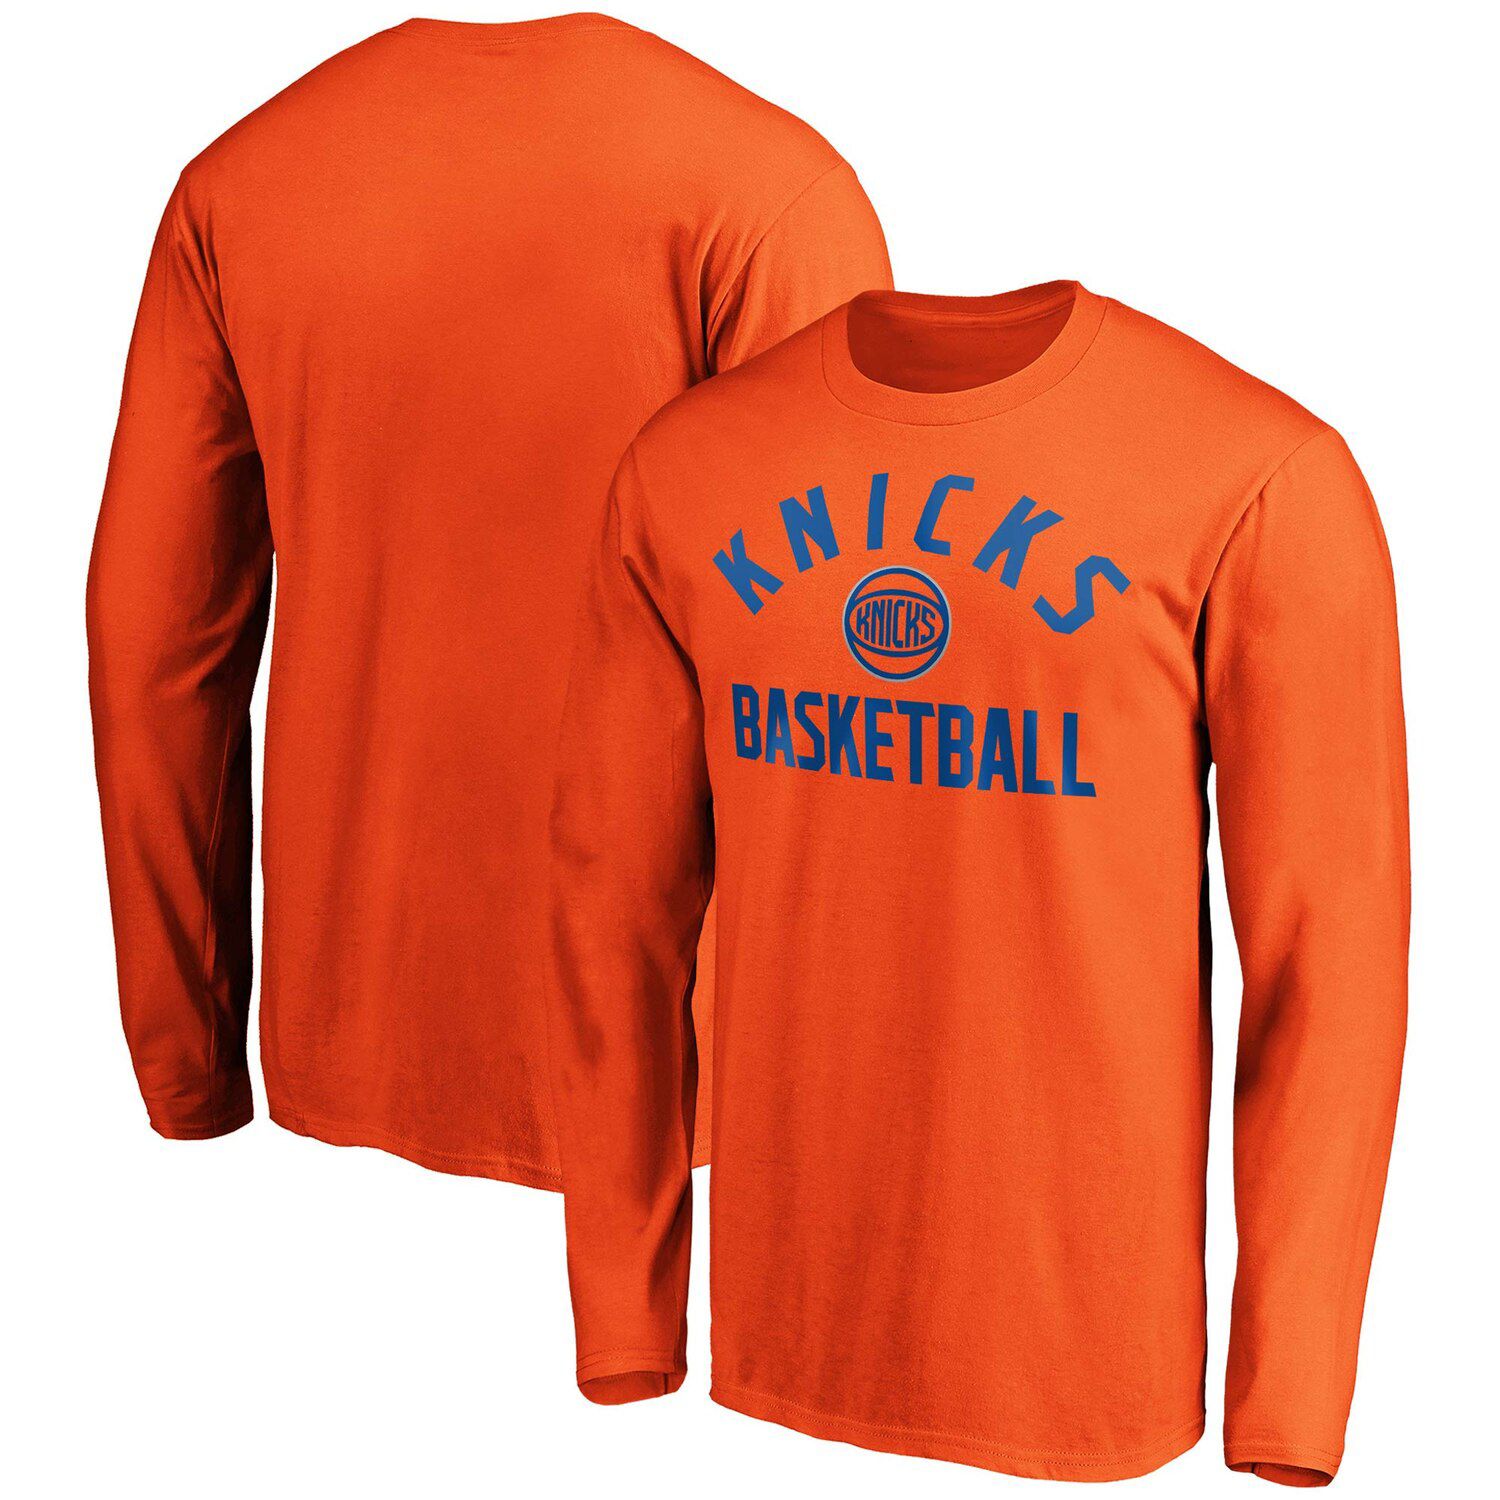 new york knicks orange jersey